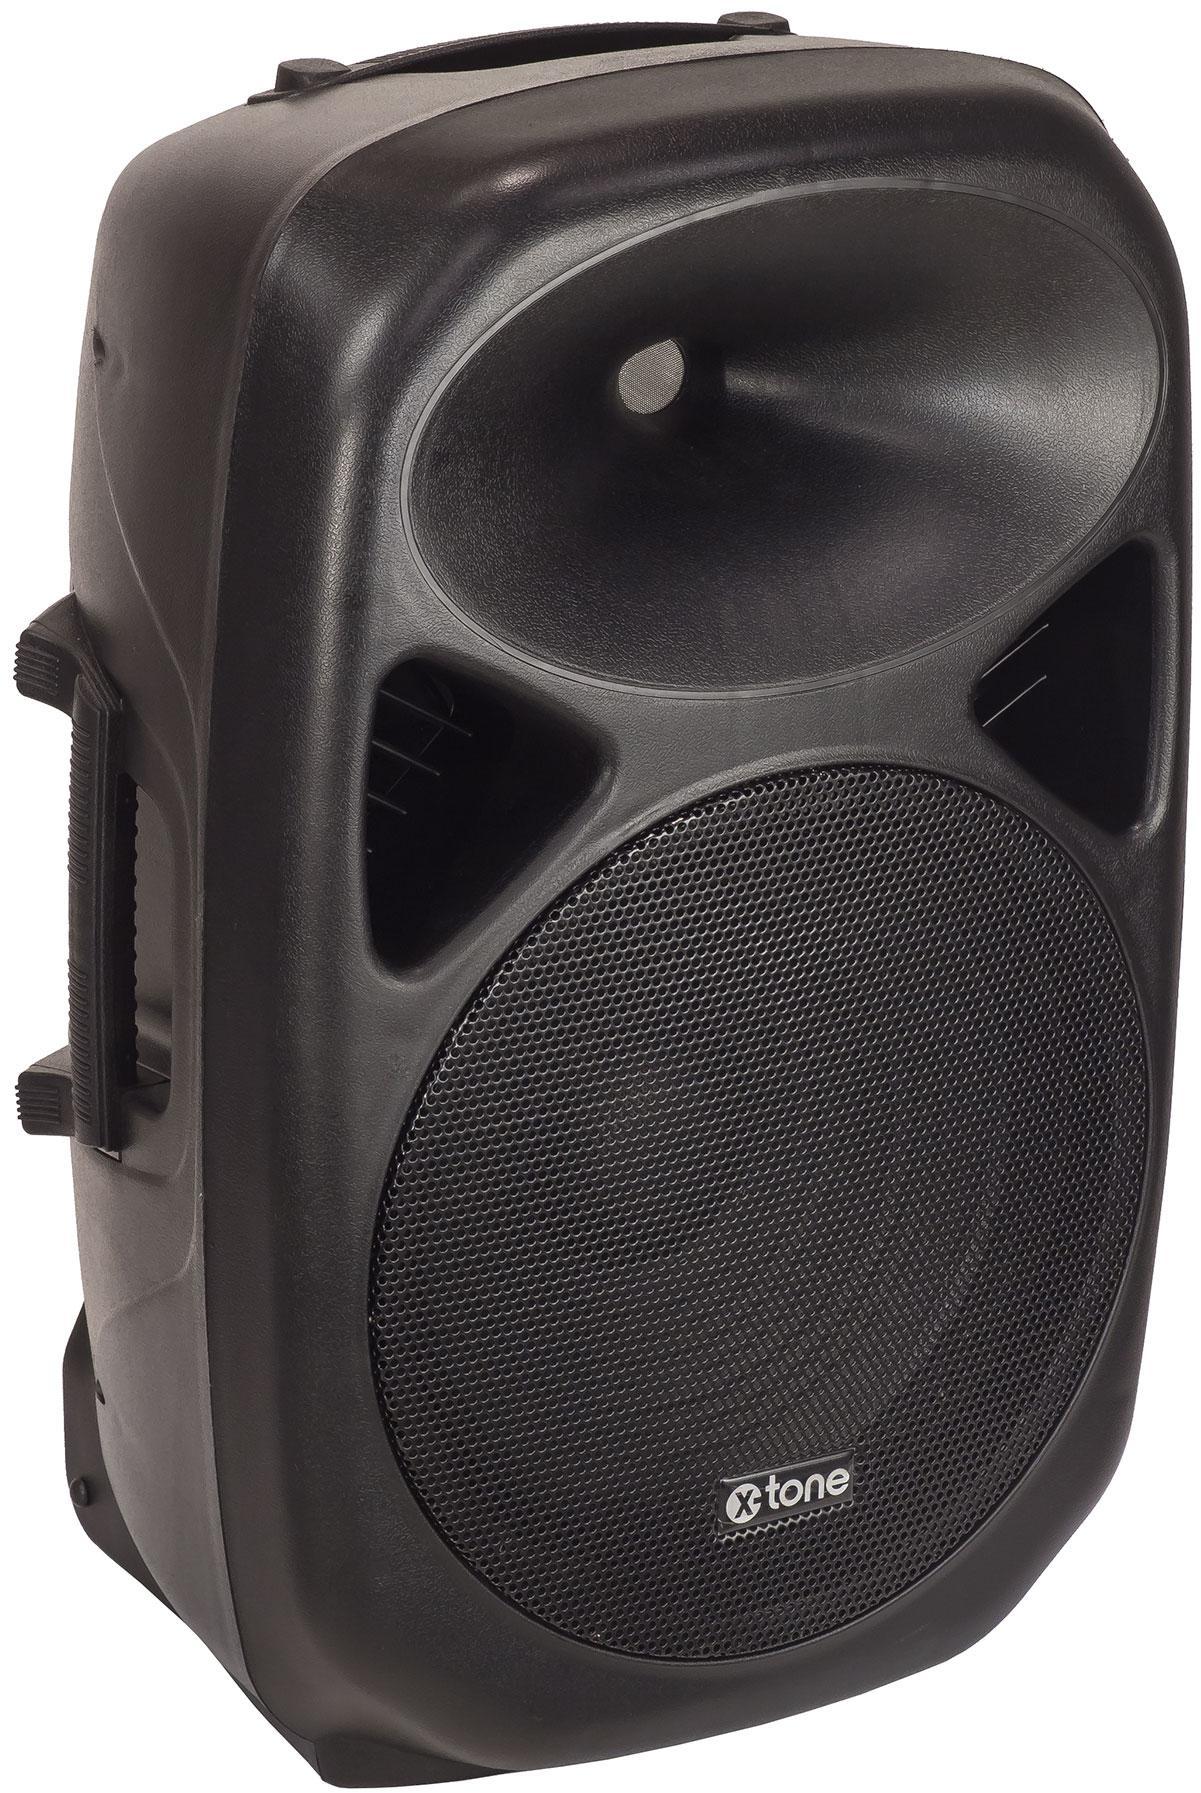 Active full-range speaker X-tone SMA-12